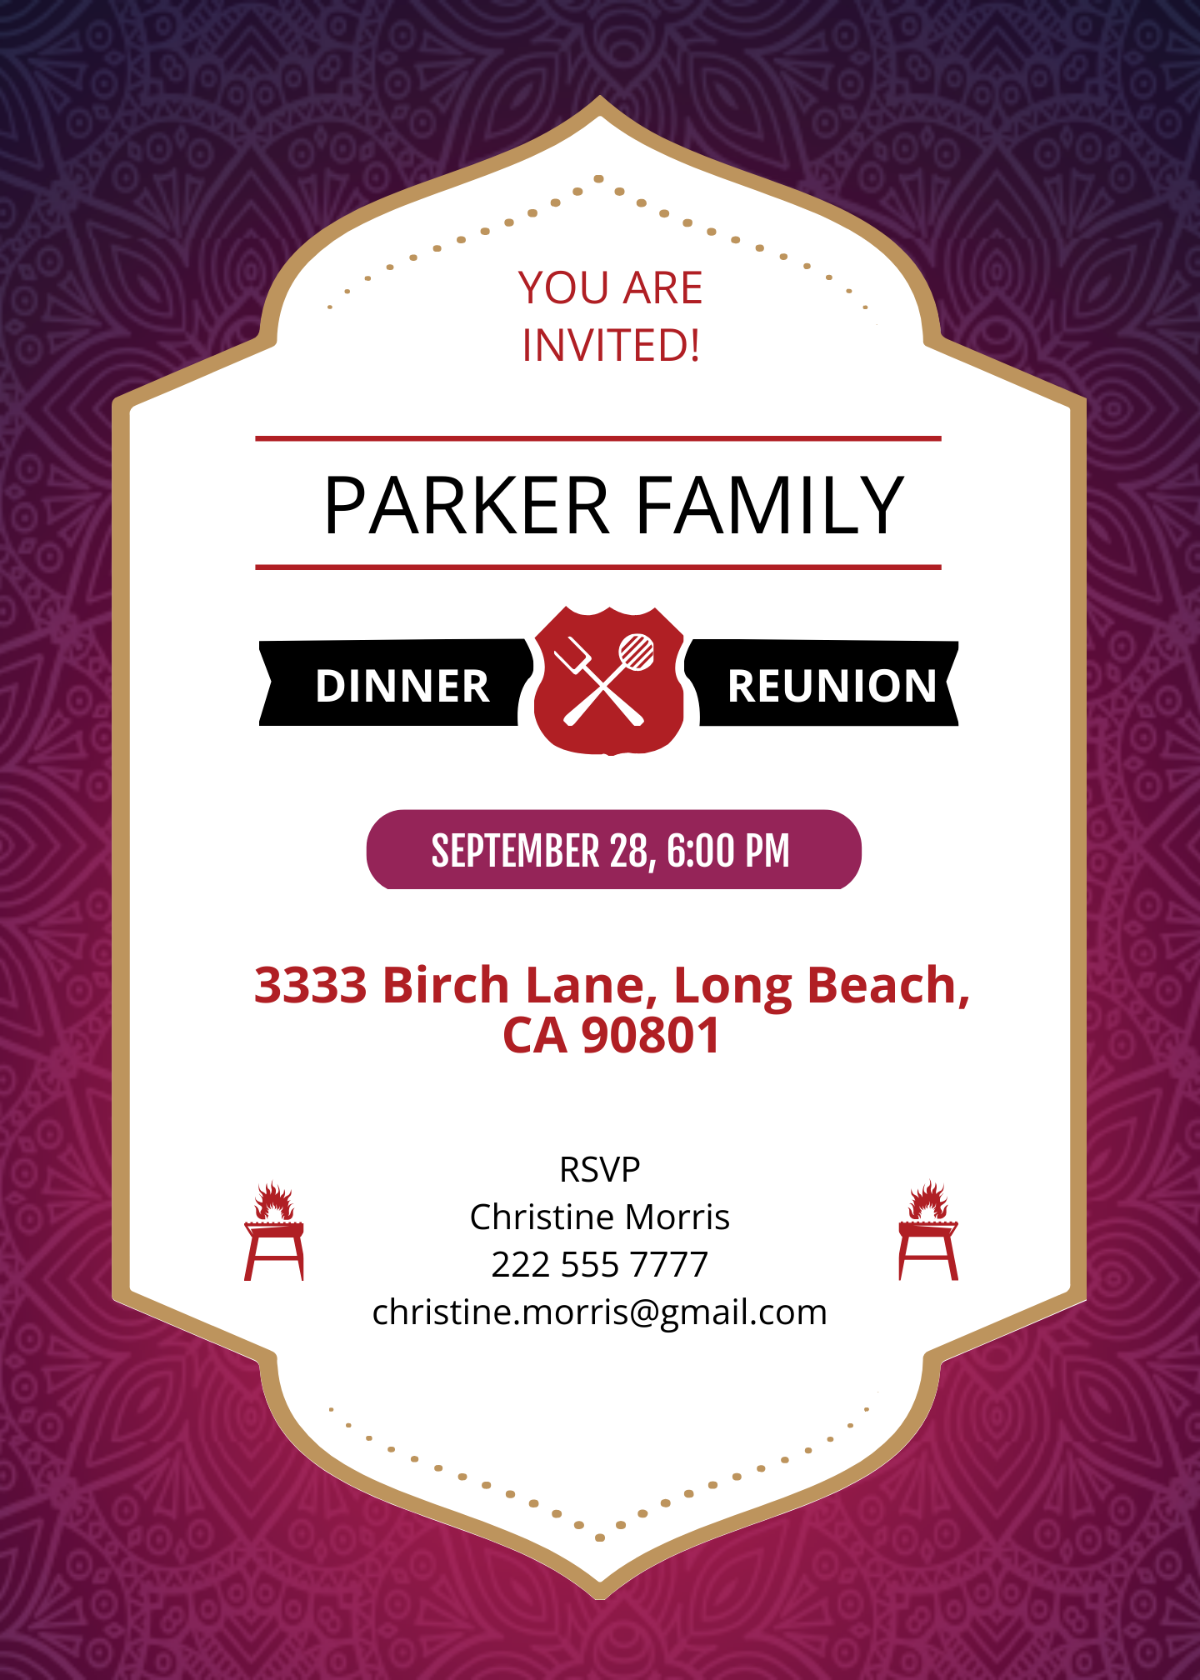 Family Dinner Reunion Invitation